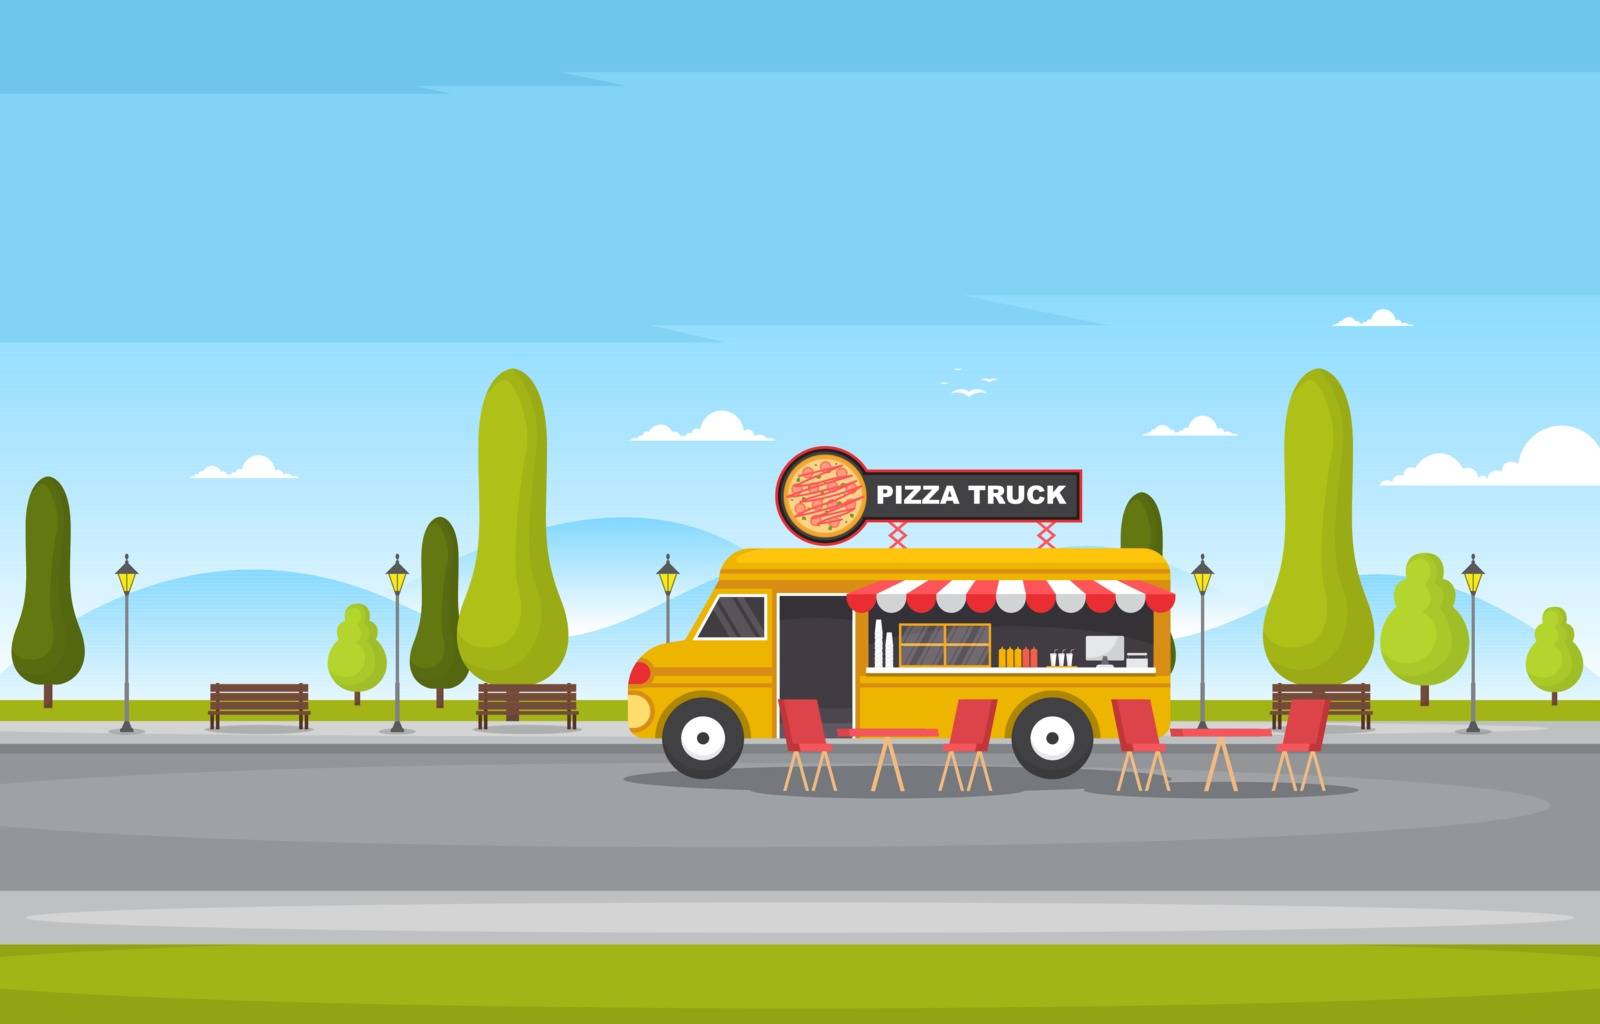 Pizza Fast Food Truck Van Car Vehicle Street Shop Illustration by jongcreative